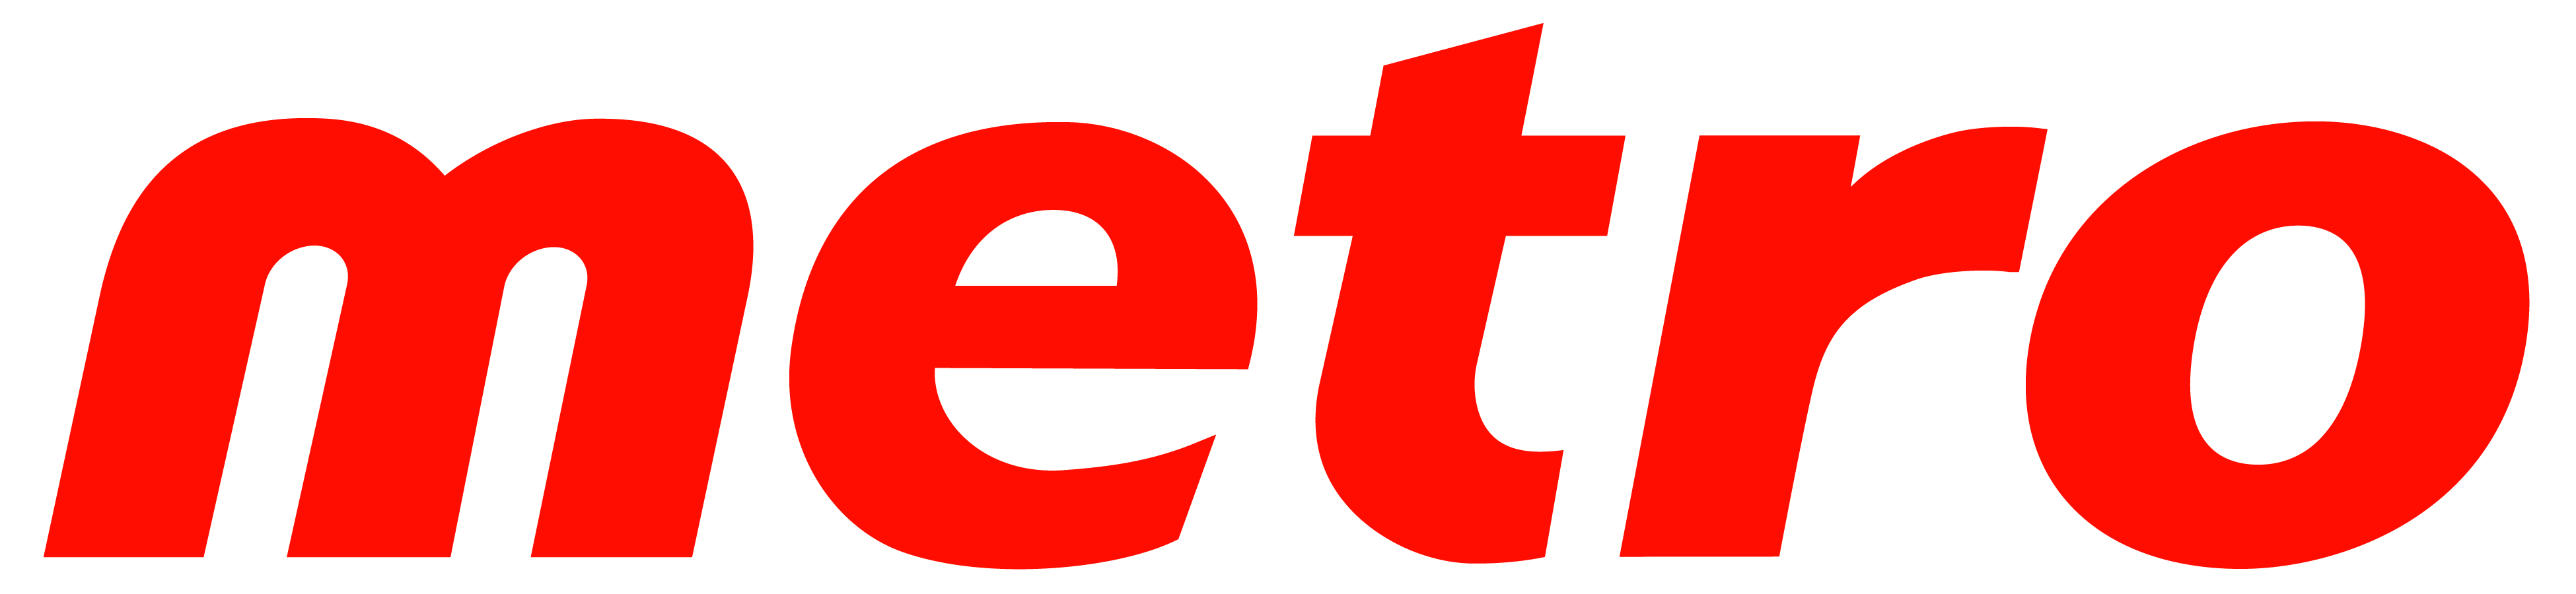 Logo Metro